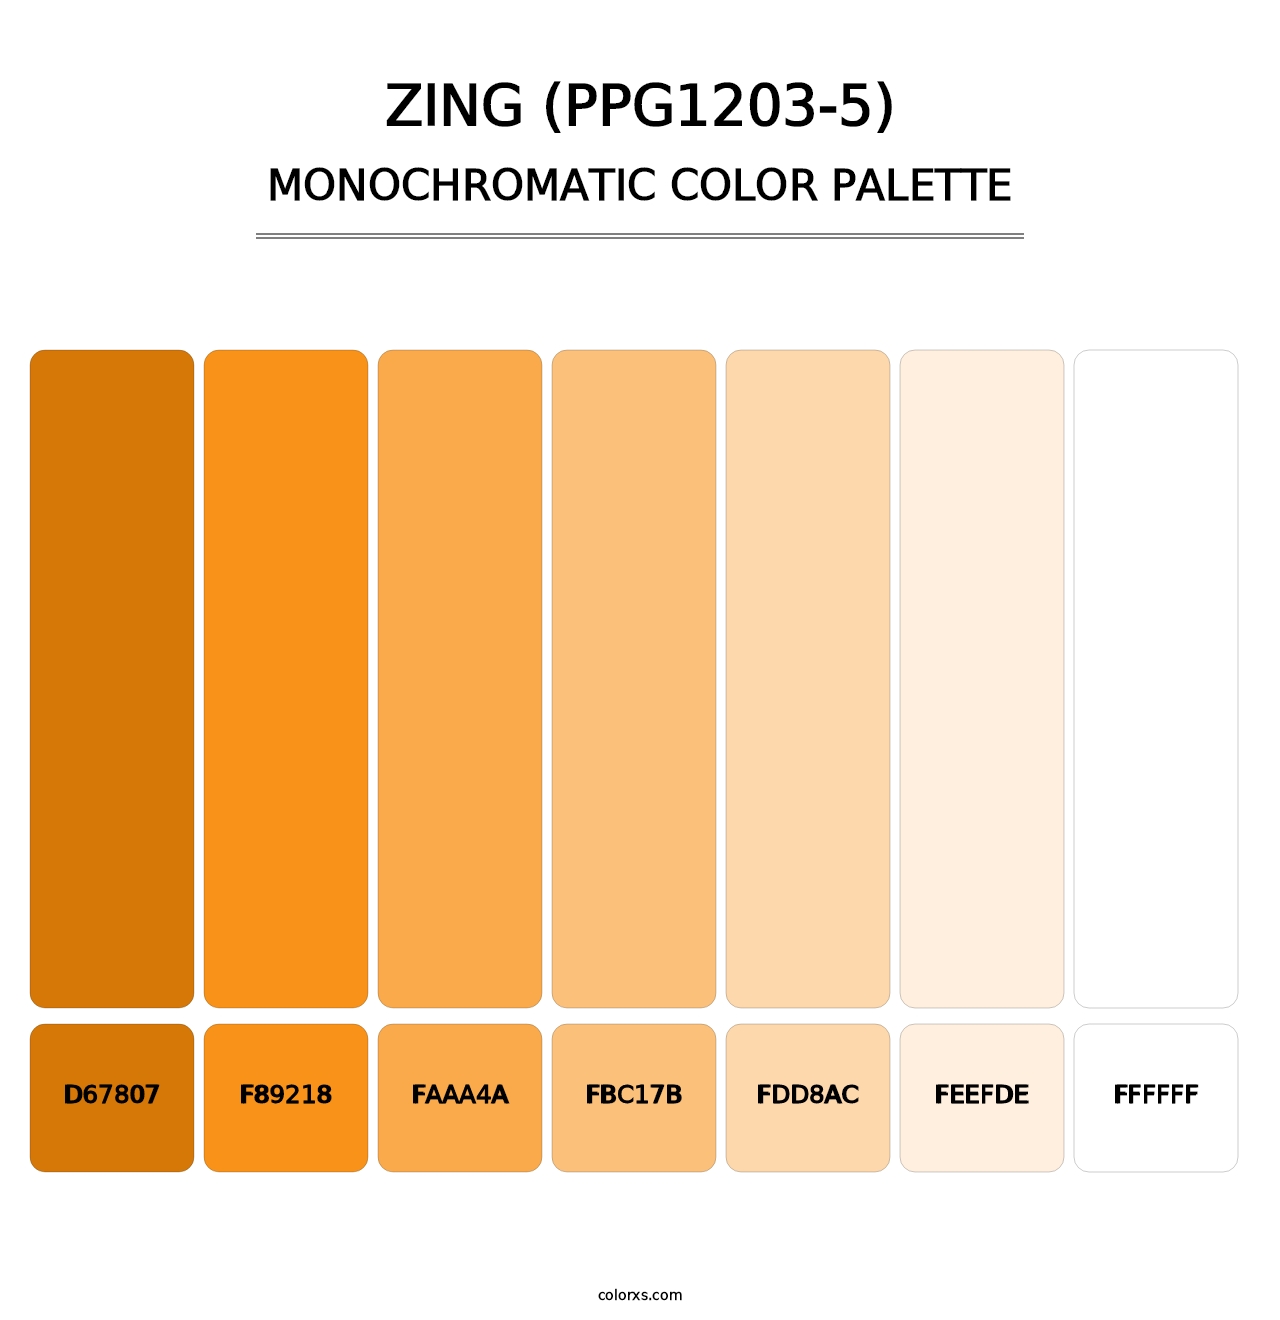 Zing (PPG1203-5) - Monochromatic Color Palette